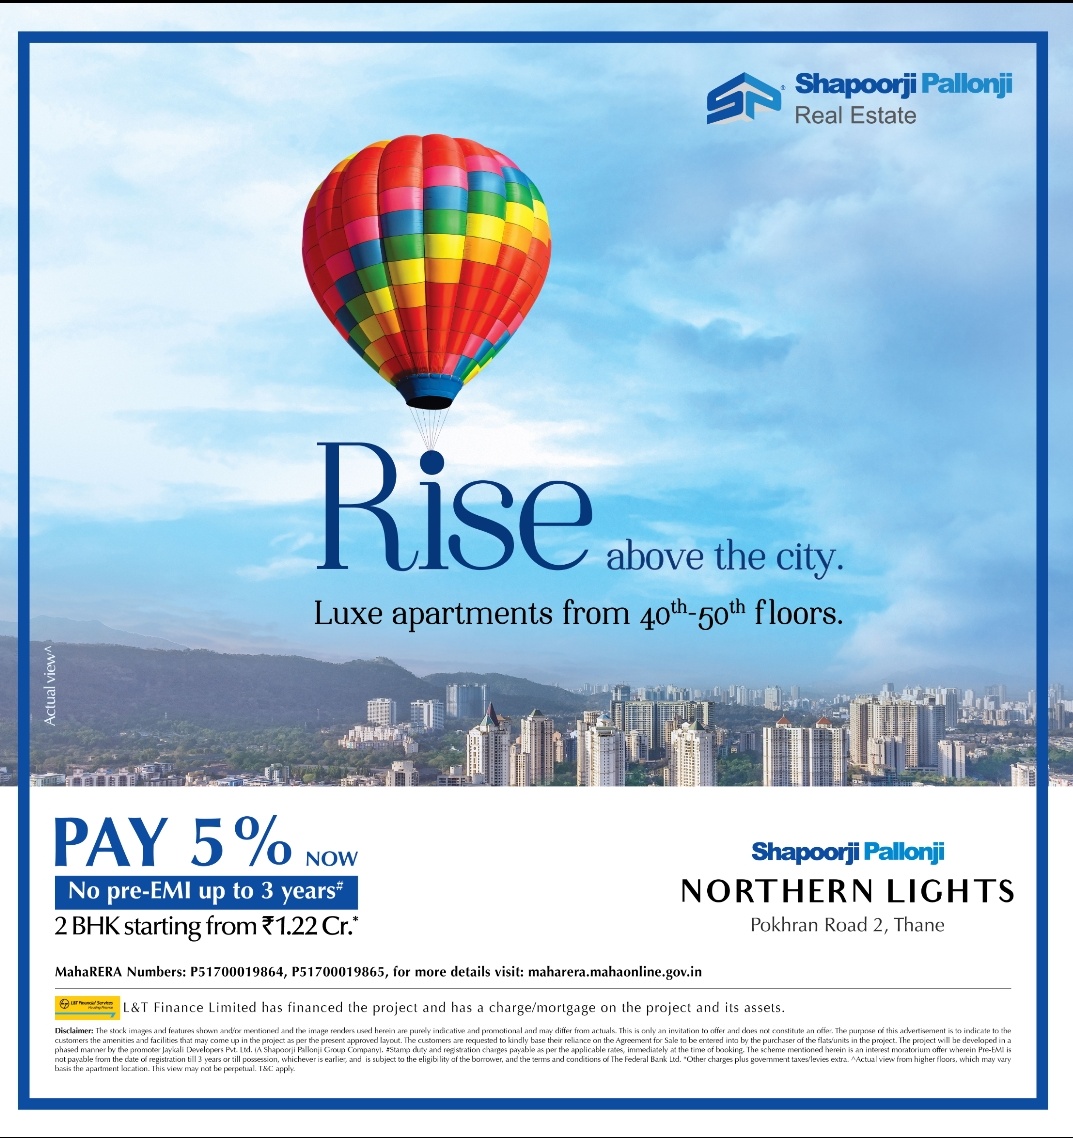 Pay 5 % now no pre EMI up to 3 years at Shapoorji Pallonji Northern Lights, Mumbai